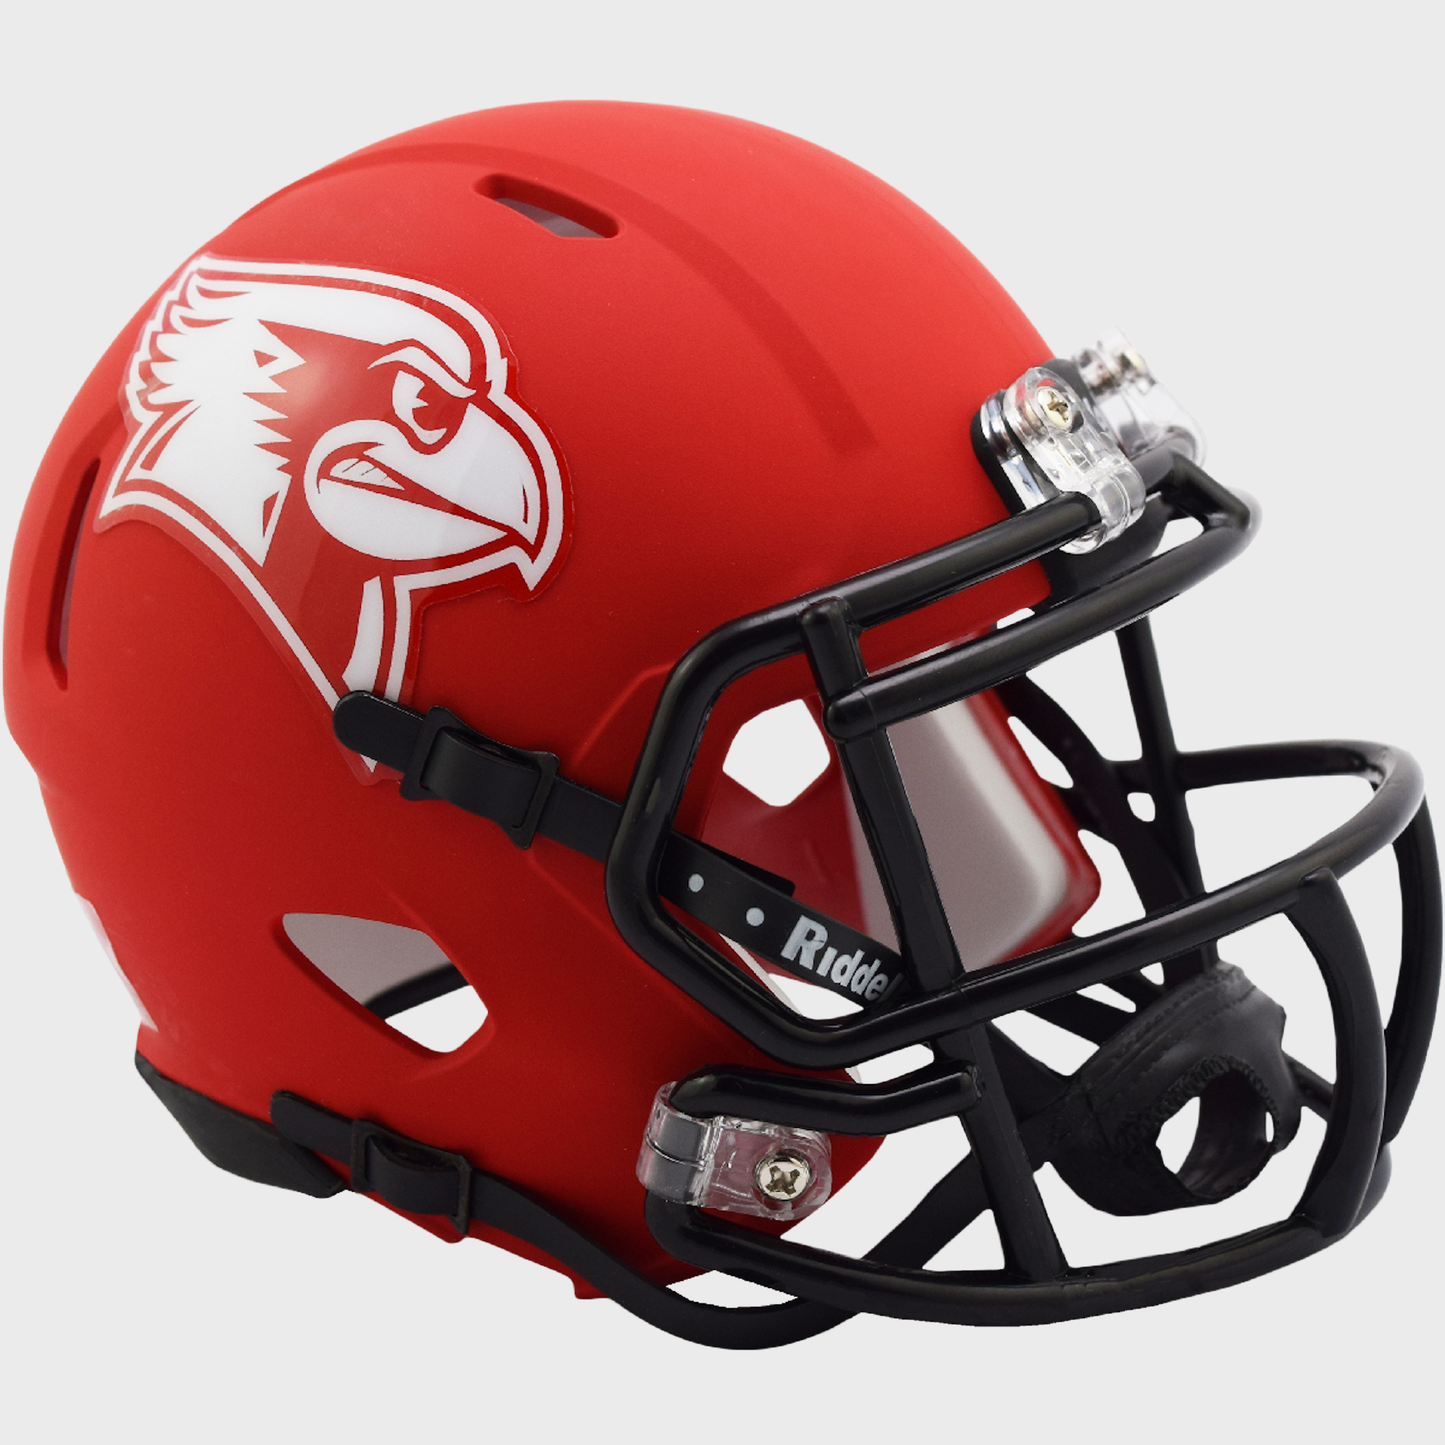 Illinois State Redbirds mini helmet